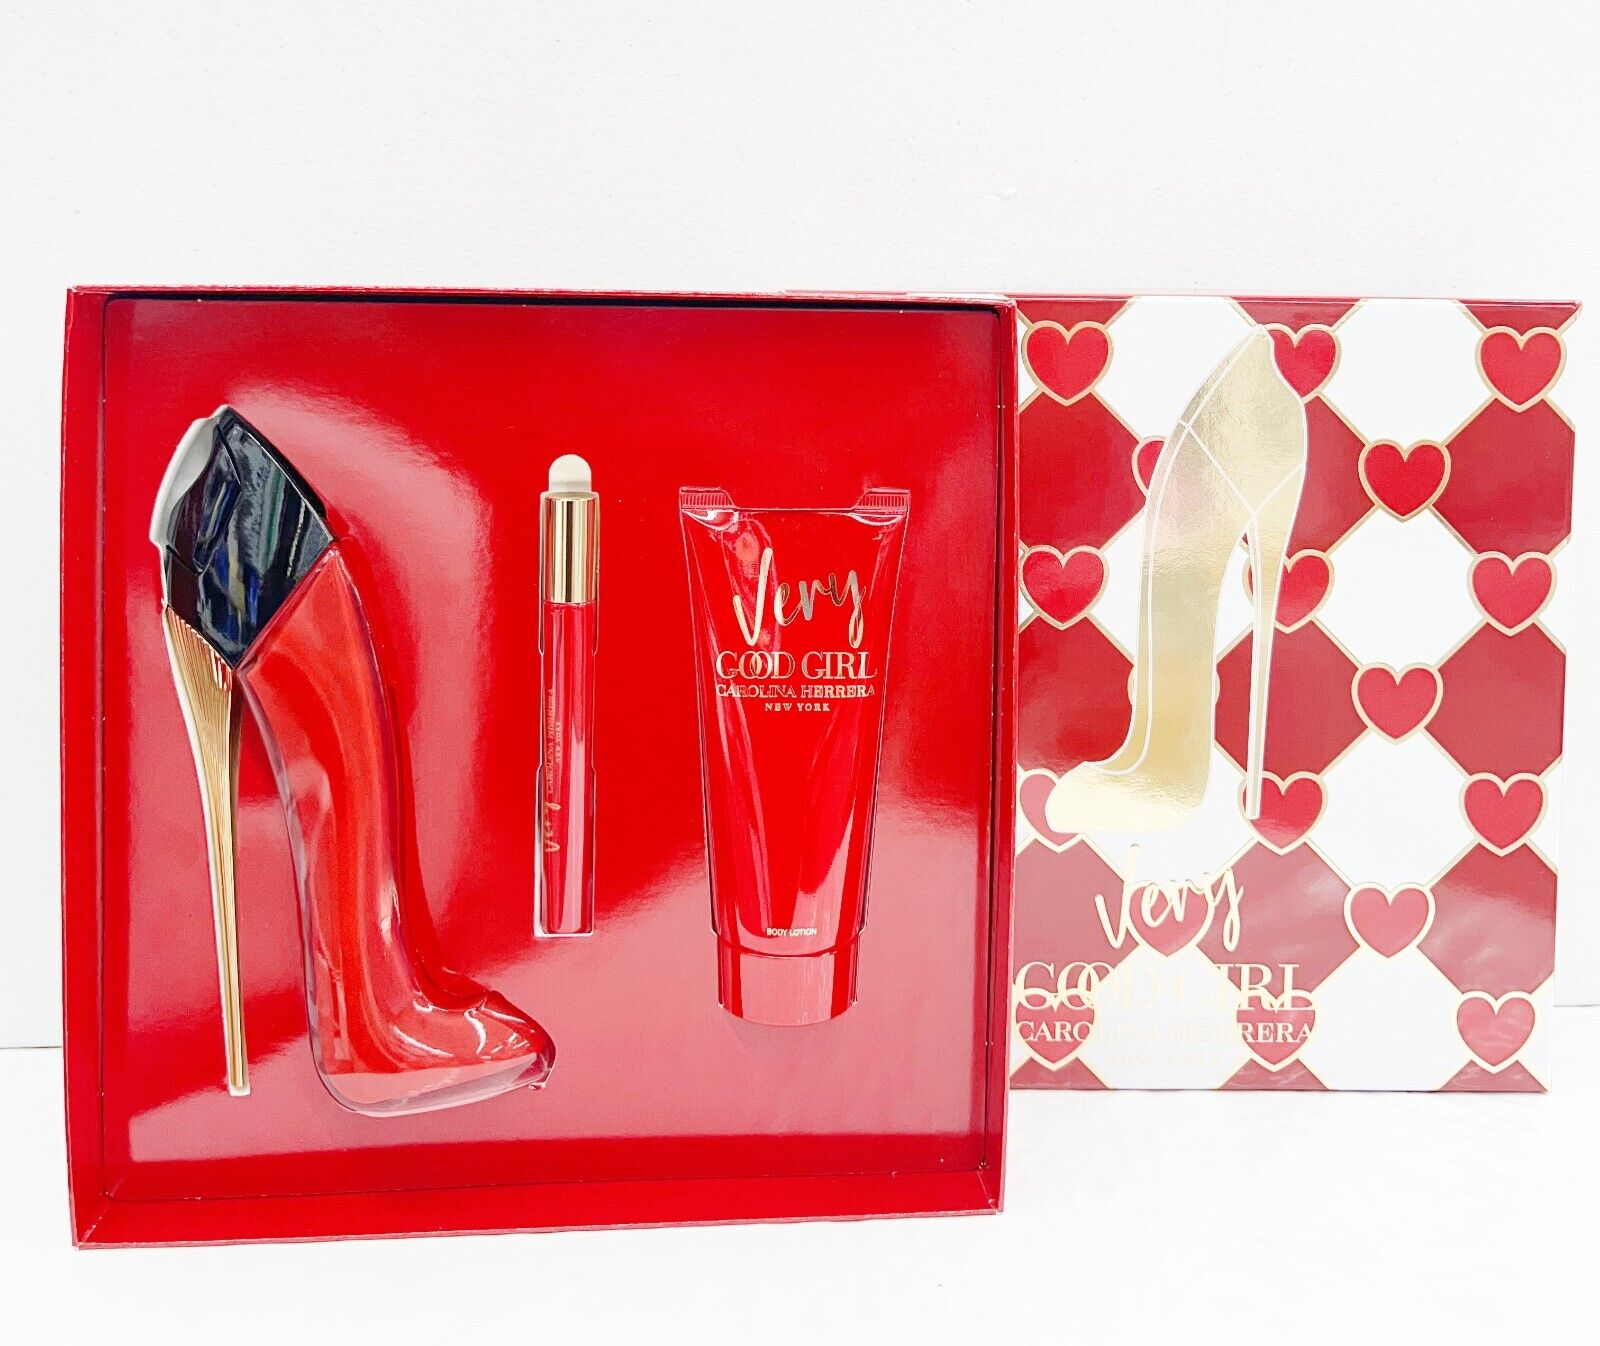 Carolina Herrera Very Good Girl Eau de Parfum 3-Piece Gift Set ($192 value)